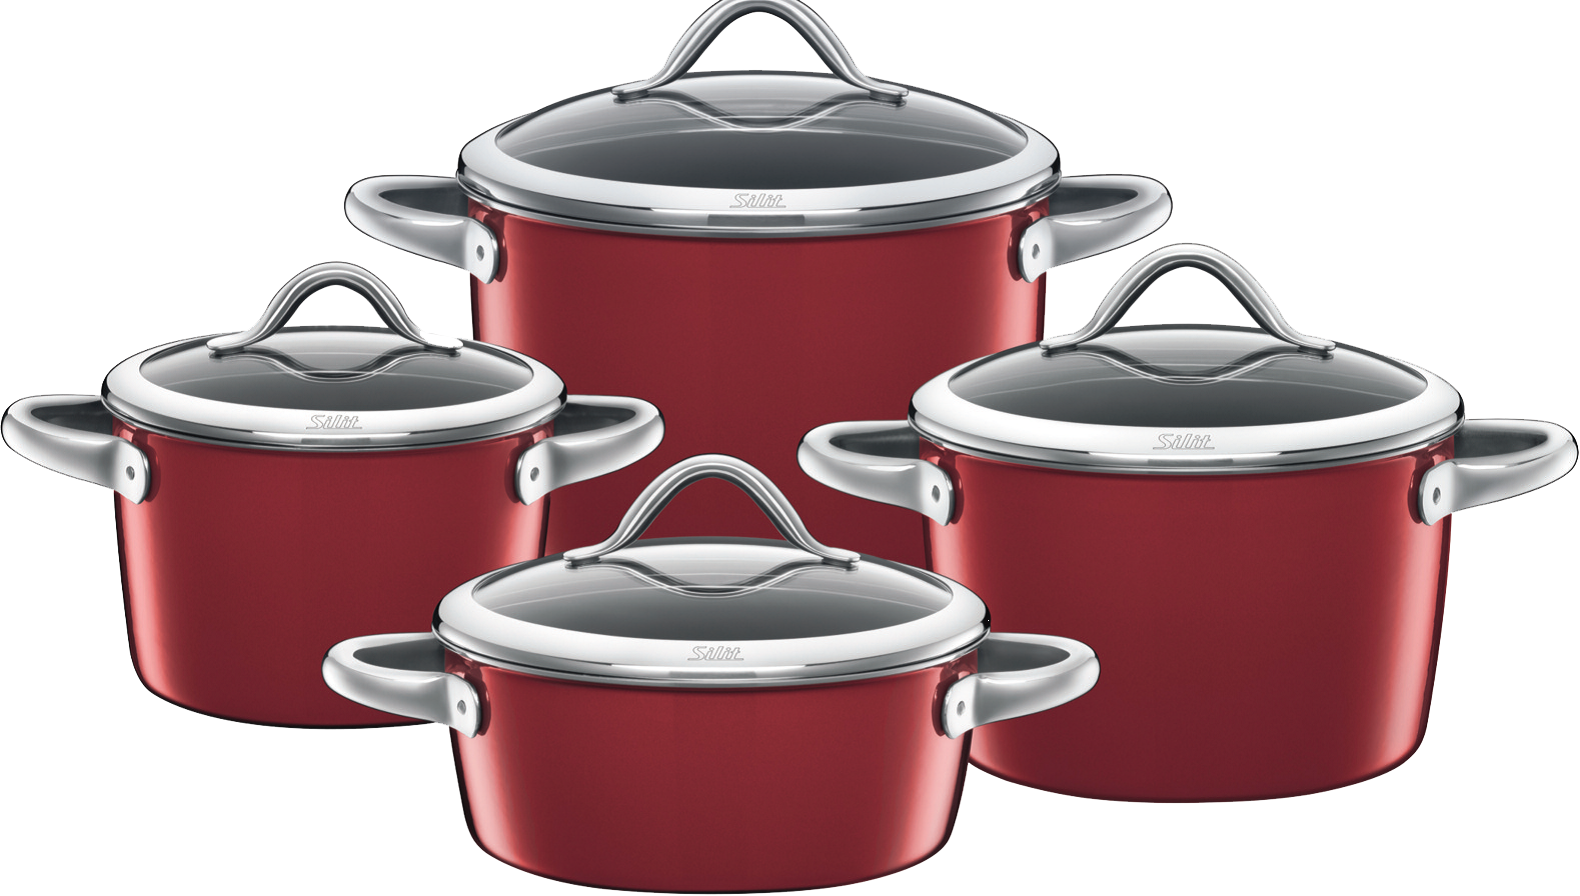 Pan clipart pots and pans, Pan pots and pans Transparent FREE for